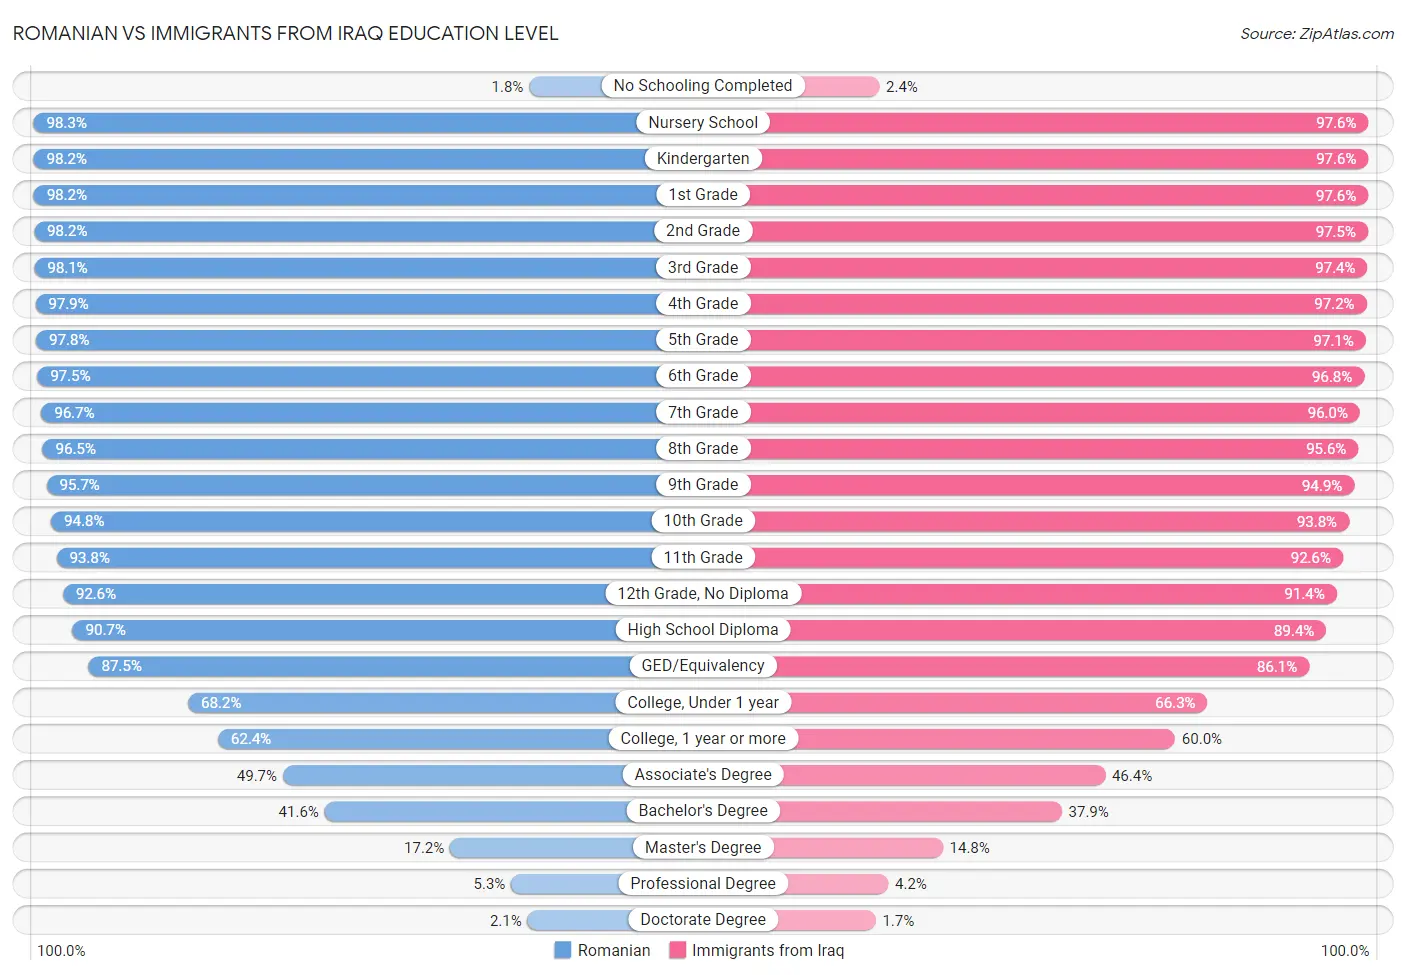 Romanian vs Immigrants from Iraq Education Level